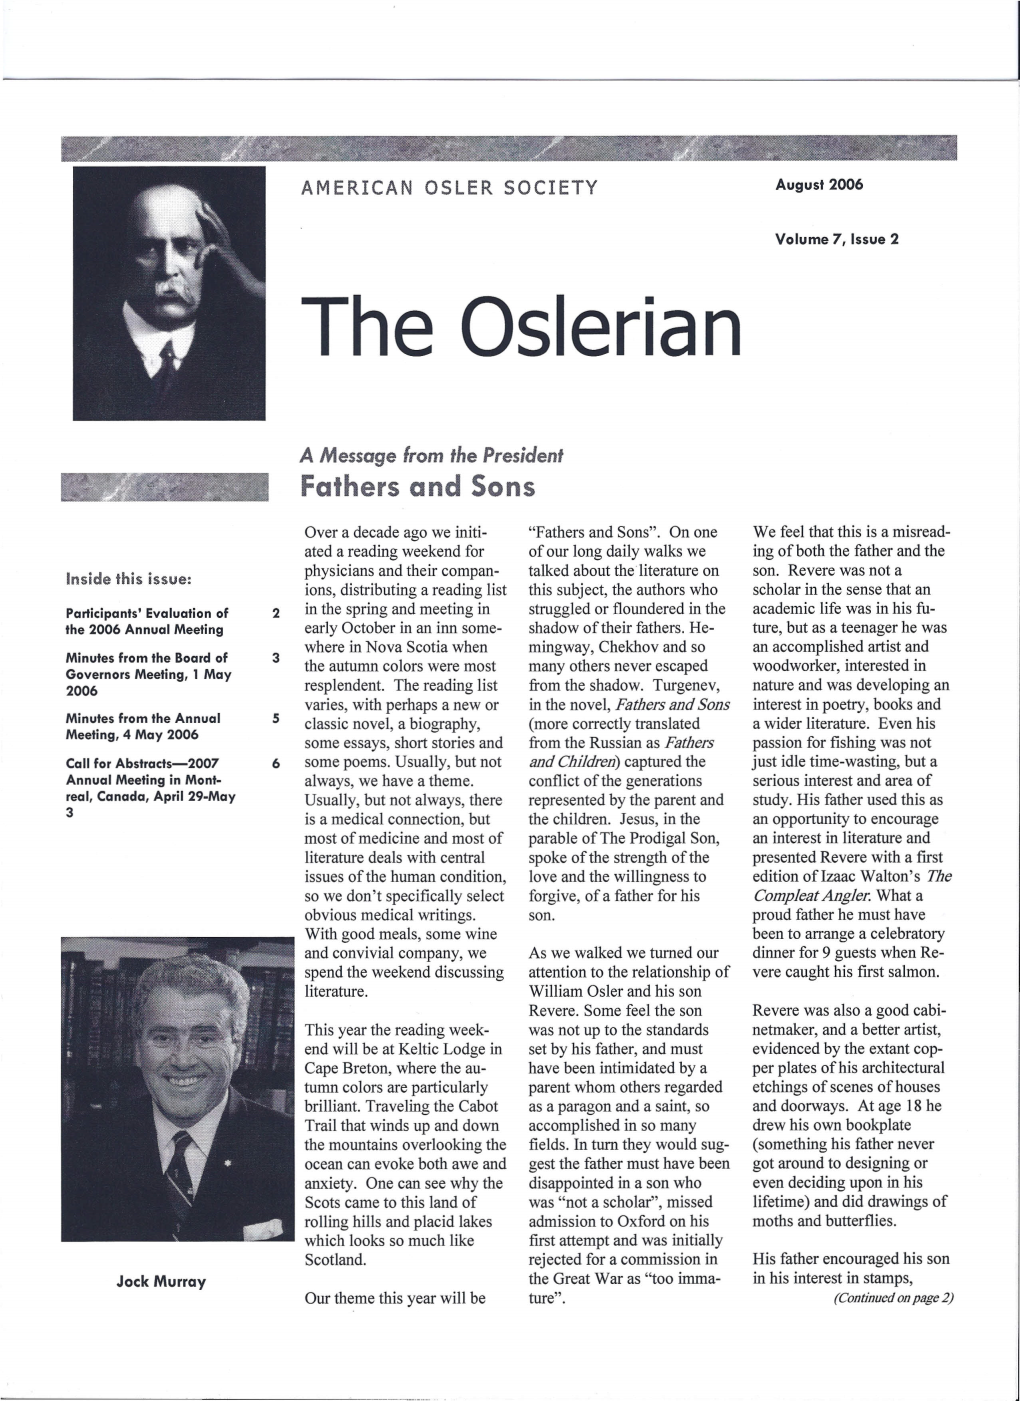 The Oslerian